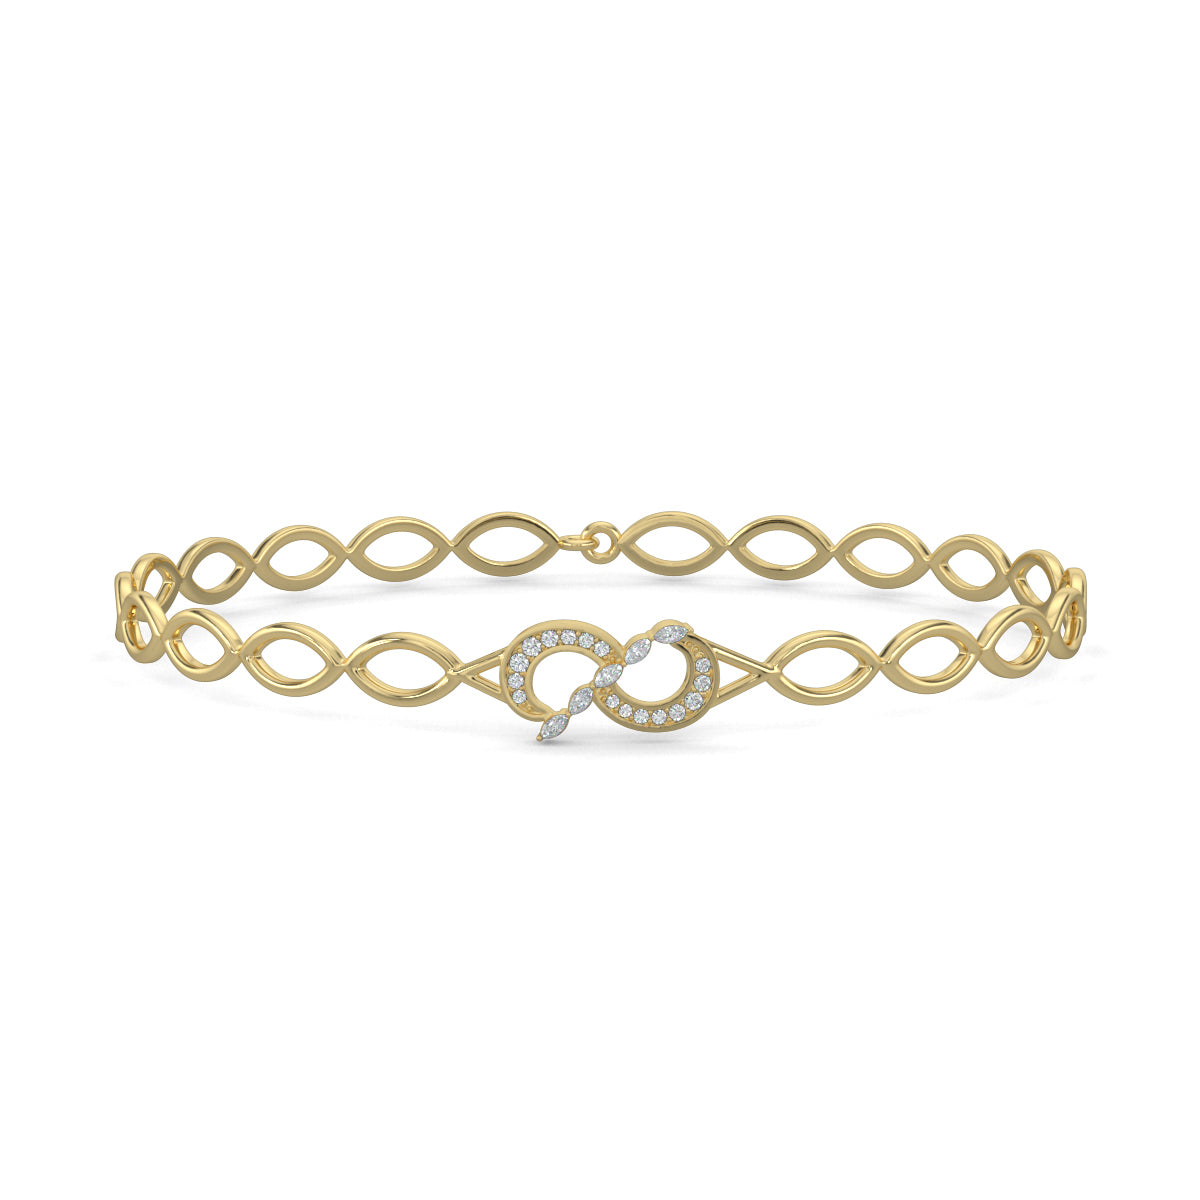 Yellow Gold, Diamond Bracelet, Natural diamond bracelet, Lab-grown diamond bracelet, eternal chain bracelet, diamond bracelet, chain band bracelet, marquise diamonds, round diamonds, elegant jewelry, timeless design